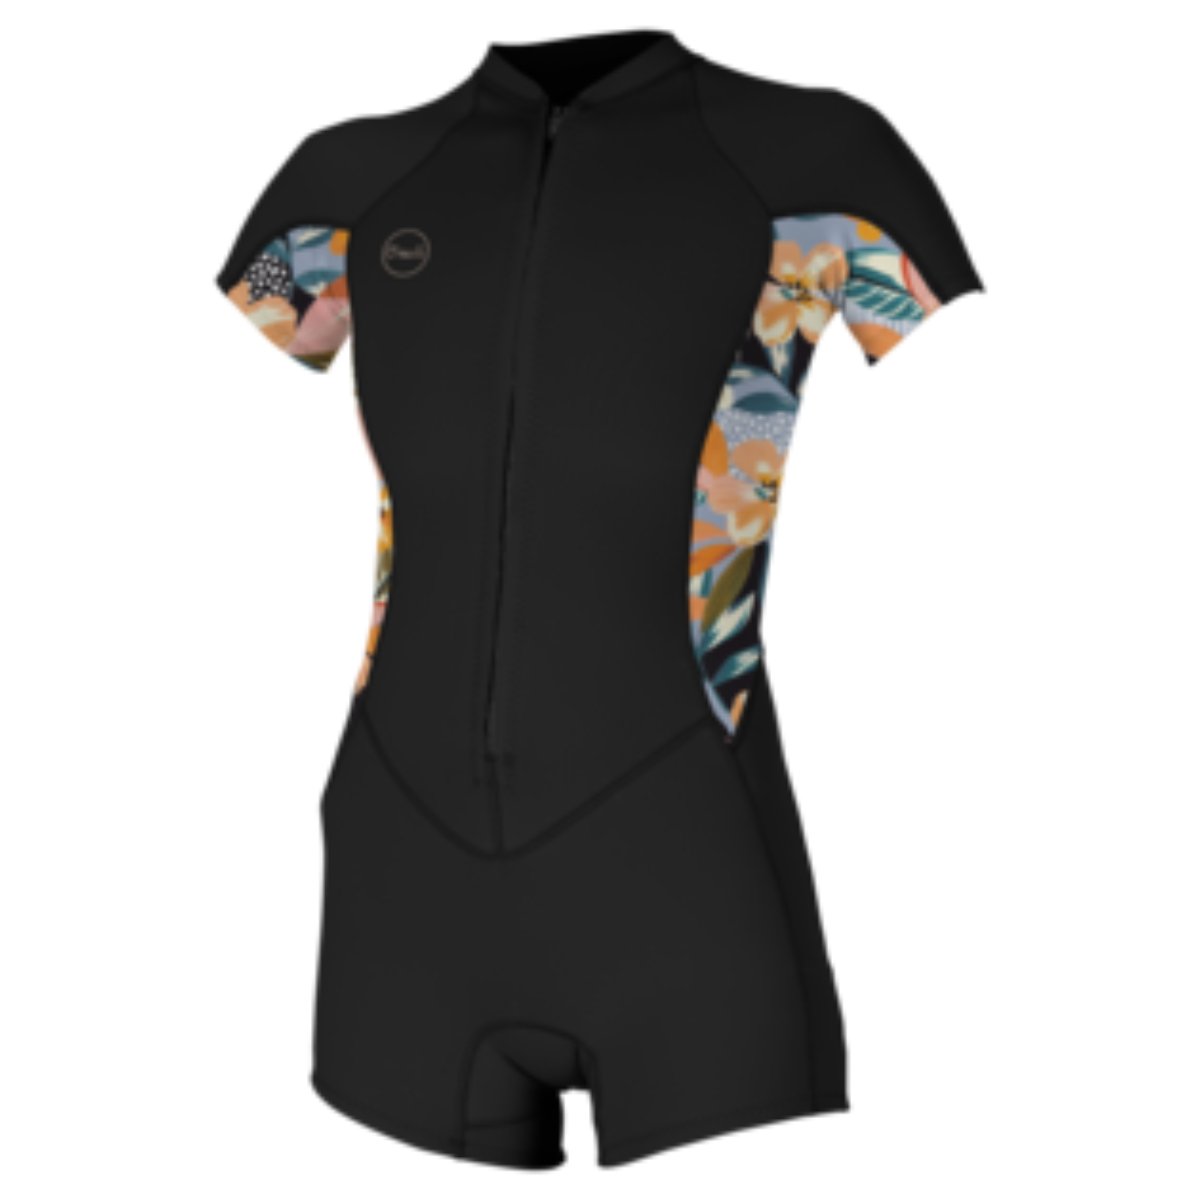 O'Neill Women's Bahia 2/1MM Full Zip S/S Spring Wetsuit in Black/Demiflor - BoardCo